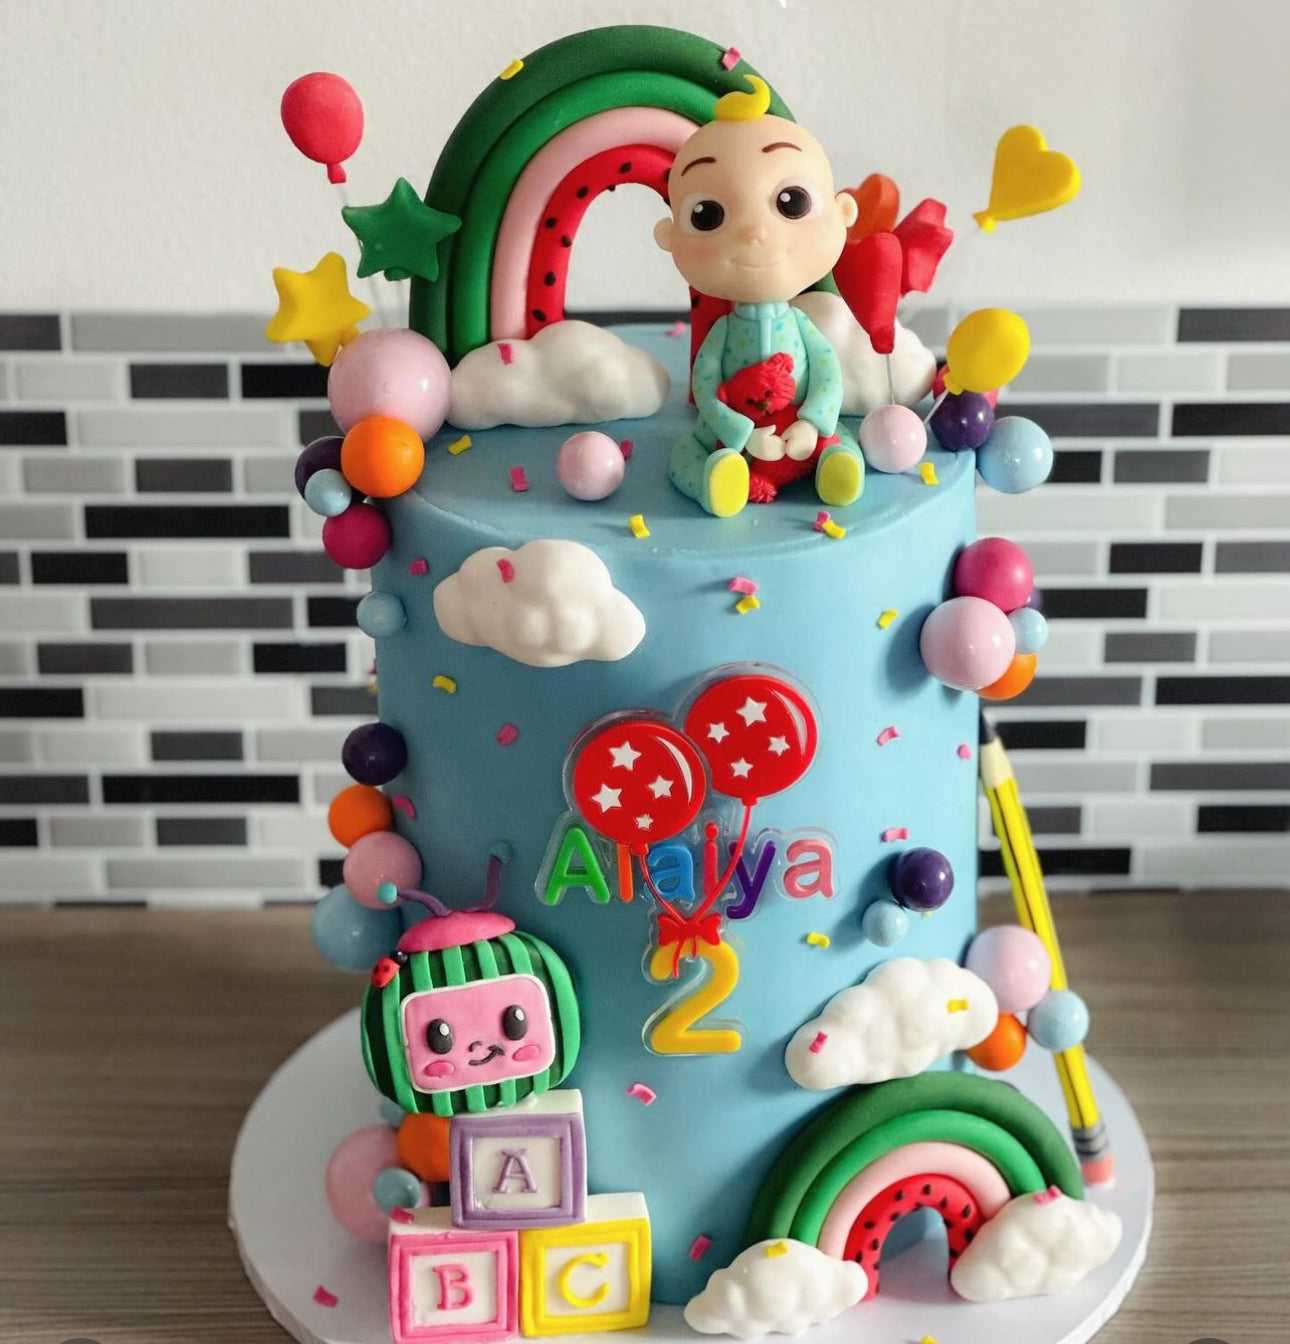 Balloon themed cake charm